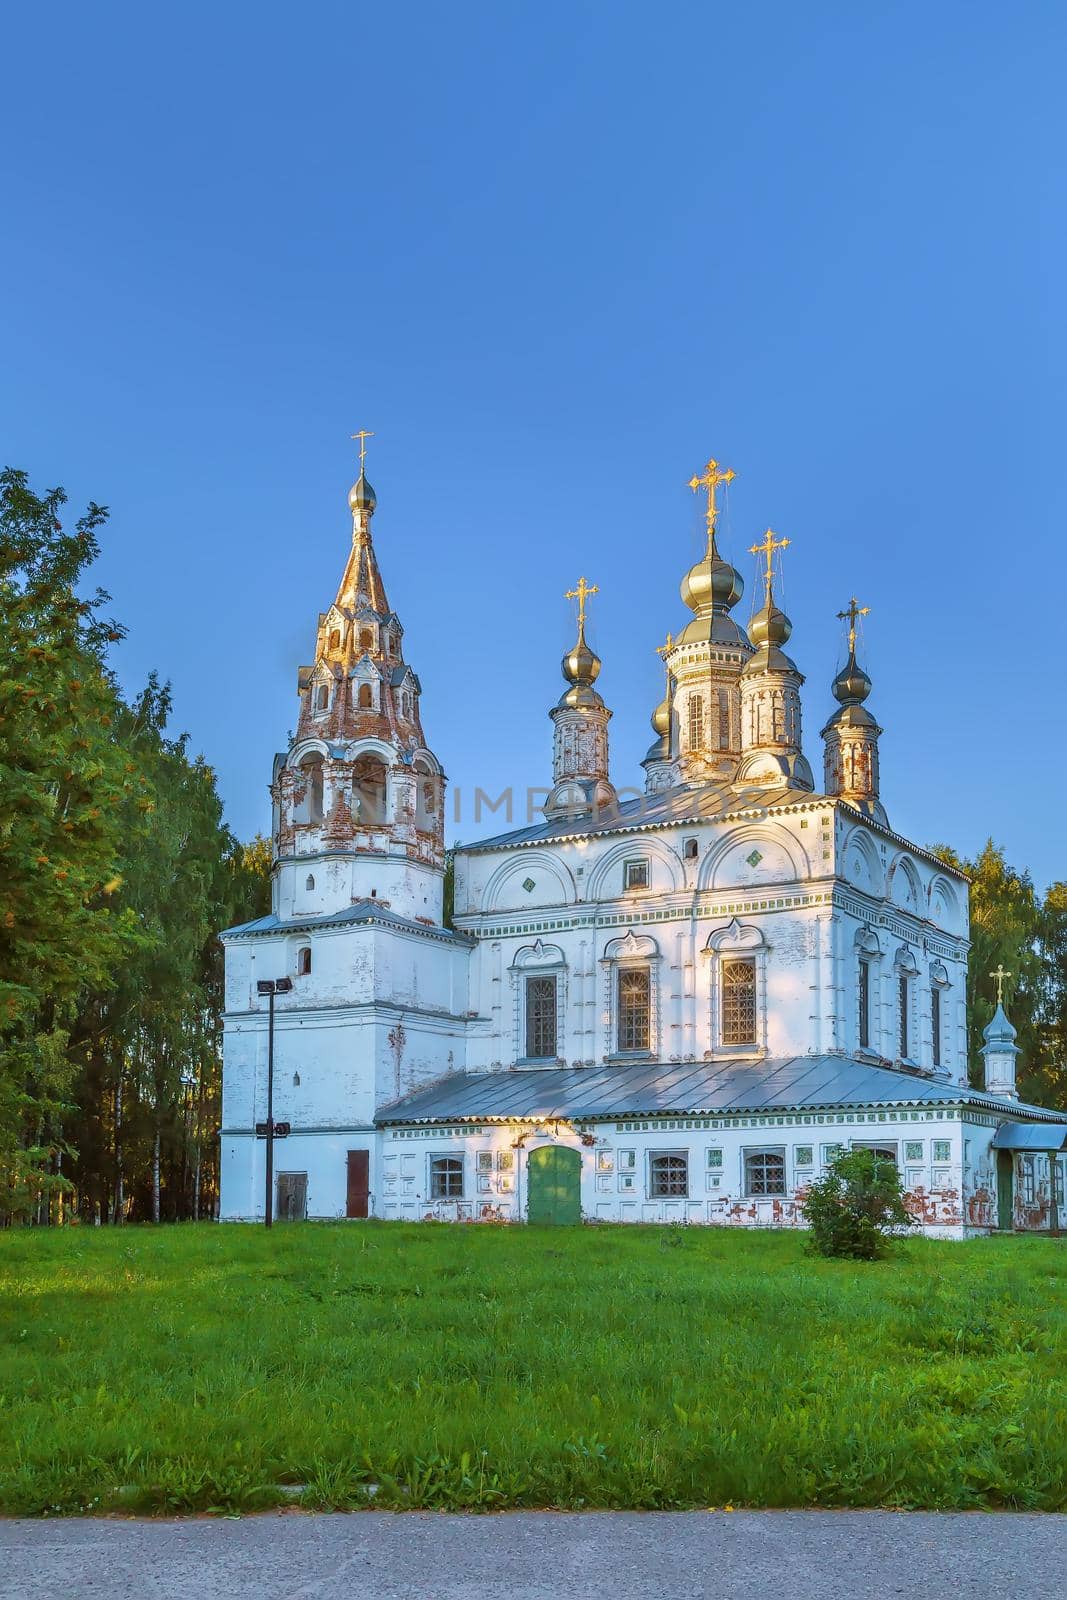 Transfiguration Church, Veliky Ustyug, Russia by borisb17